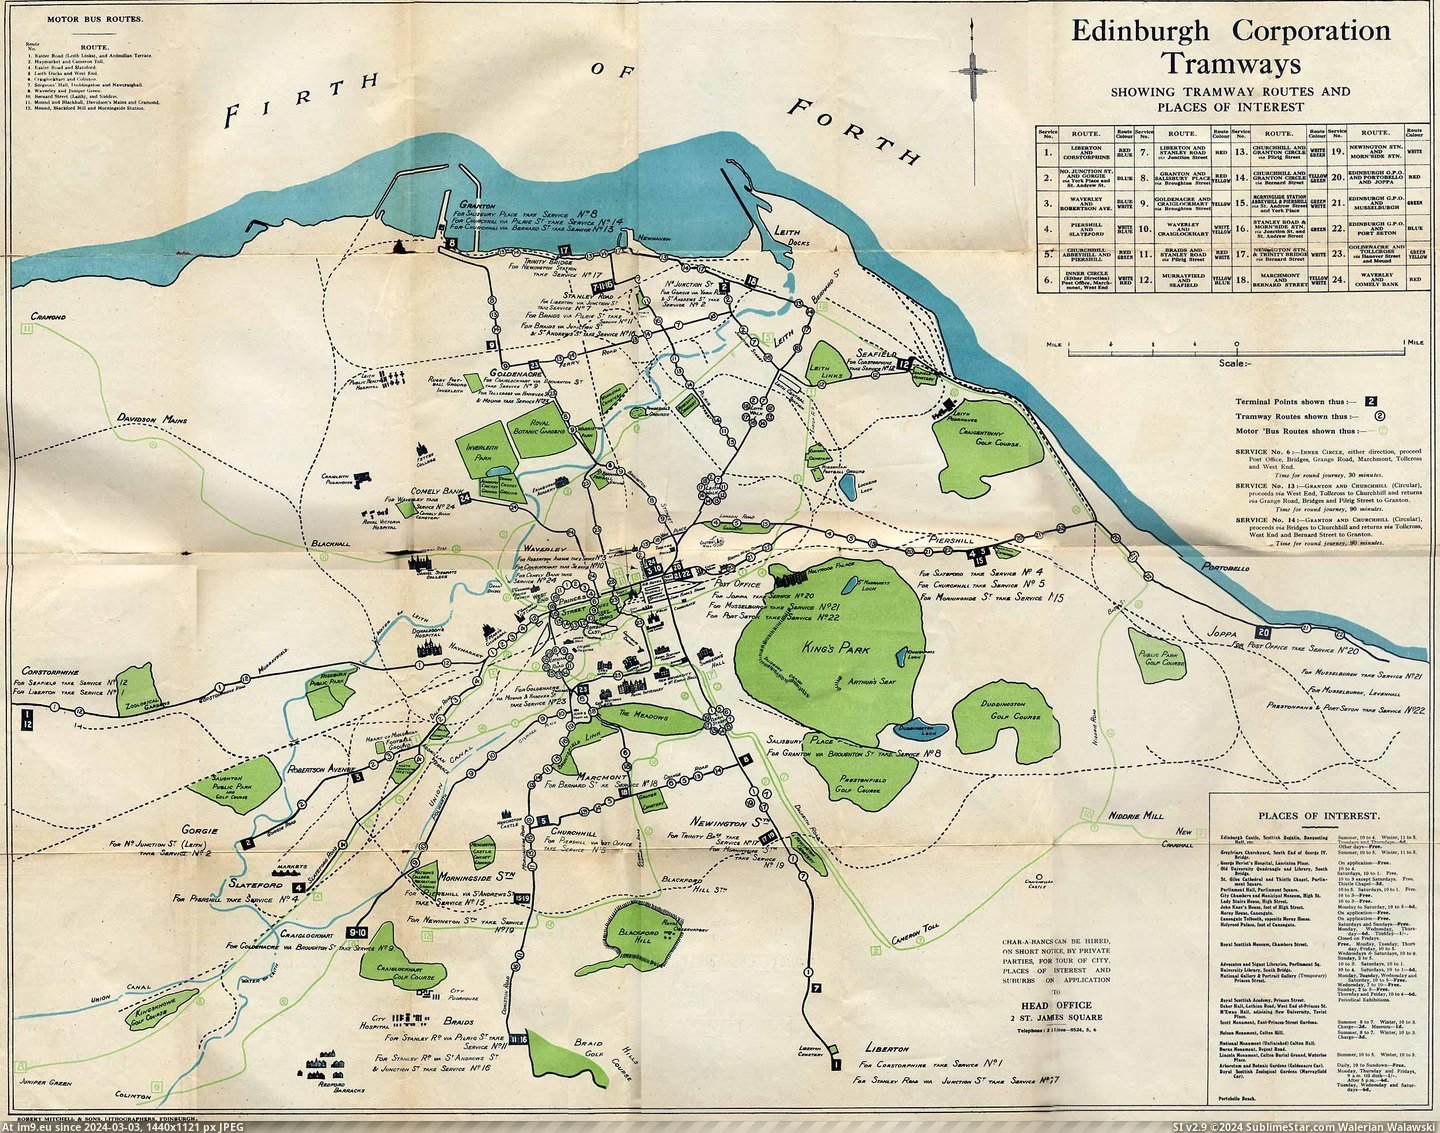  #Edinburgh  [Mapporn] Edinburgh Corporation Tramways [2500x1959] Pic. (Image of album My r/MAPS favs))